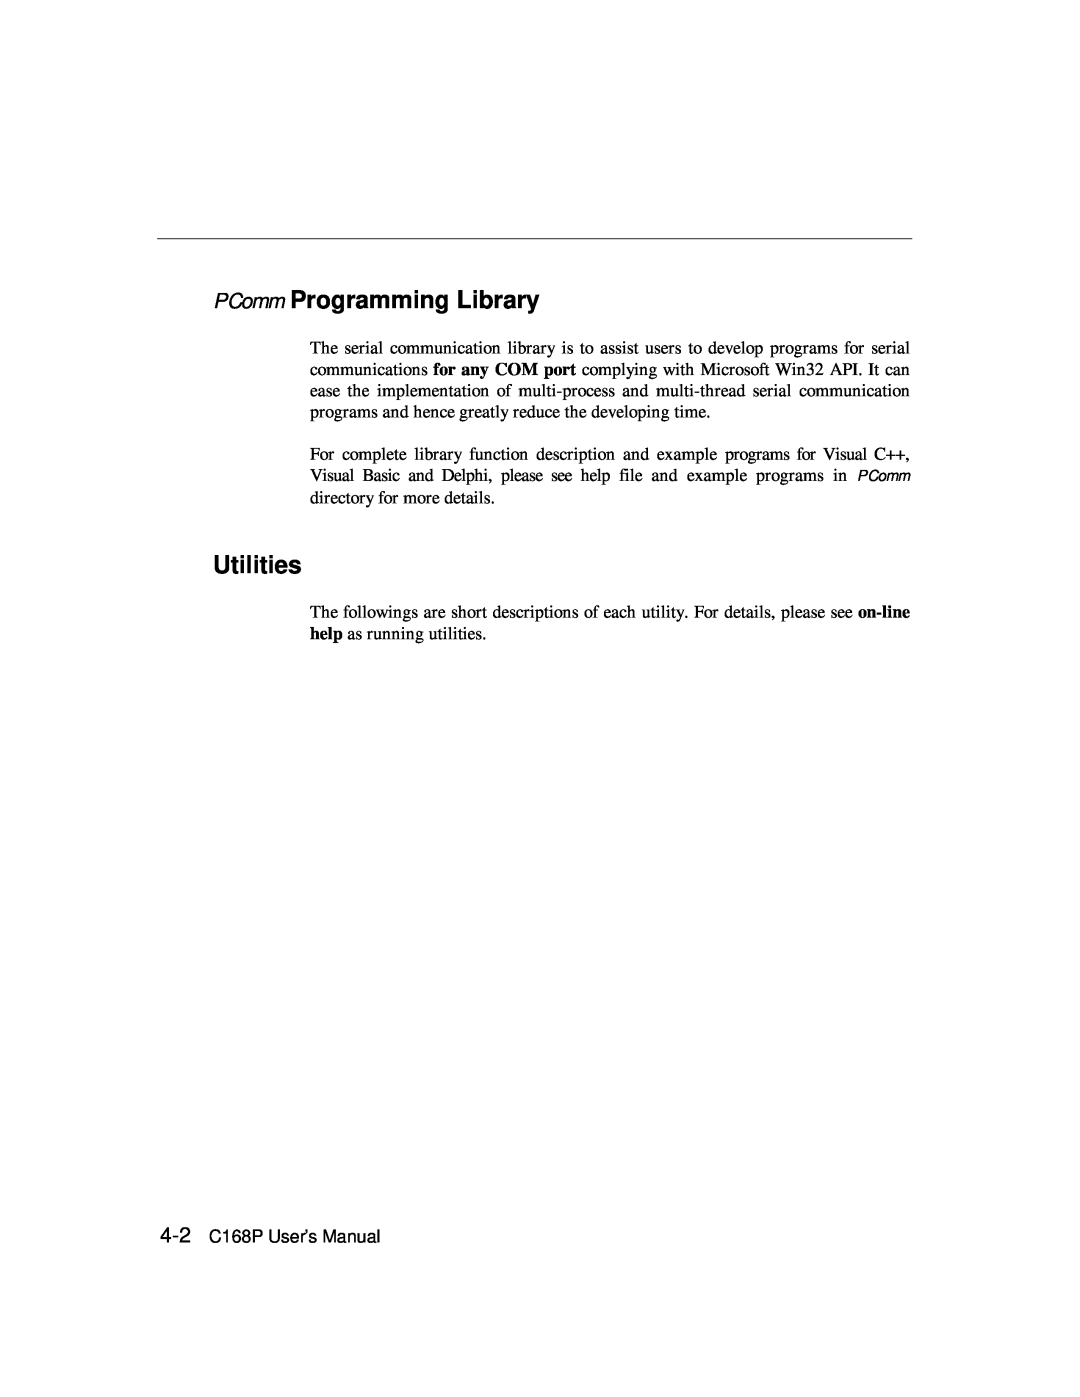 Moxa Technologies user manual PComm Programming Library, Utilities, 4-2 C168P User’s Manual 